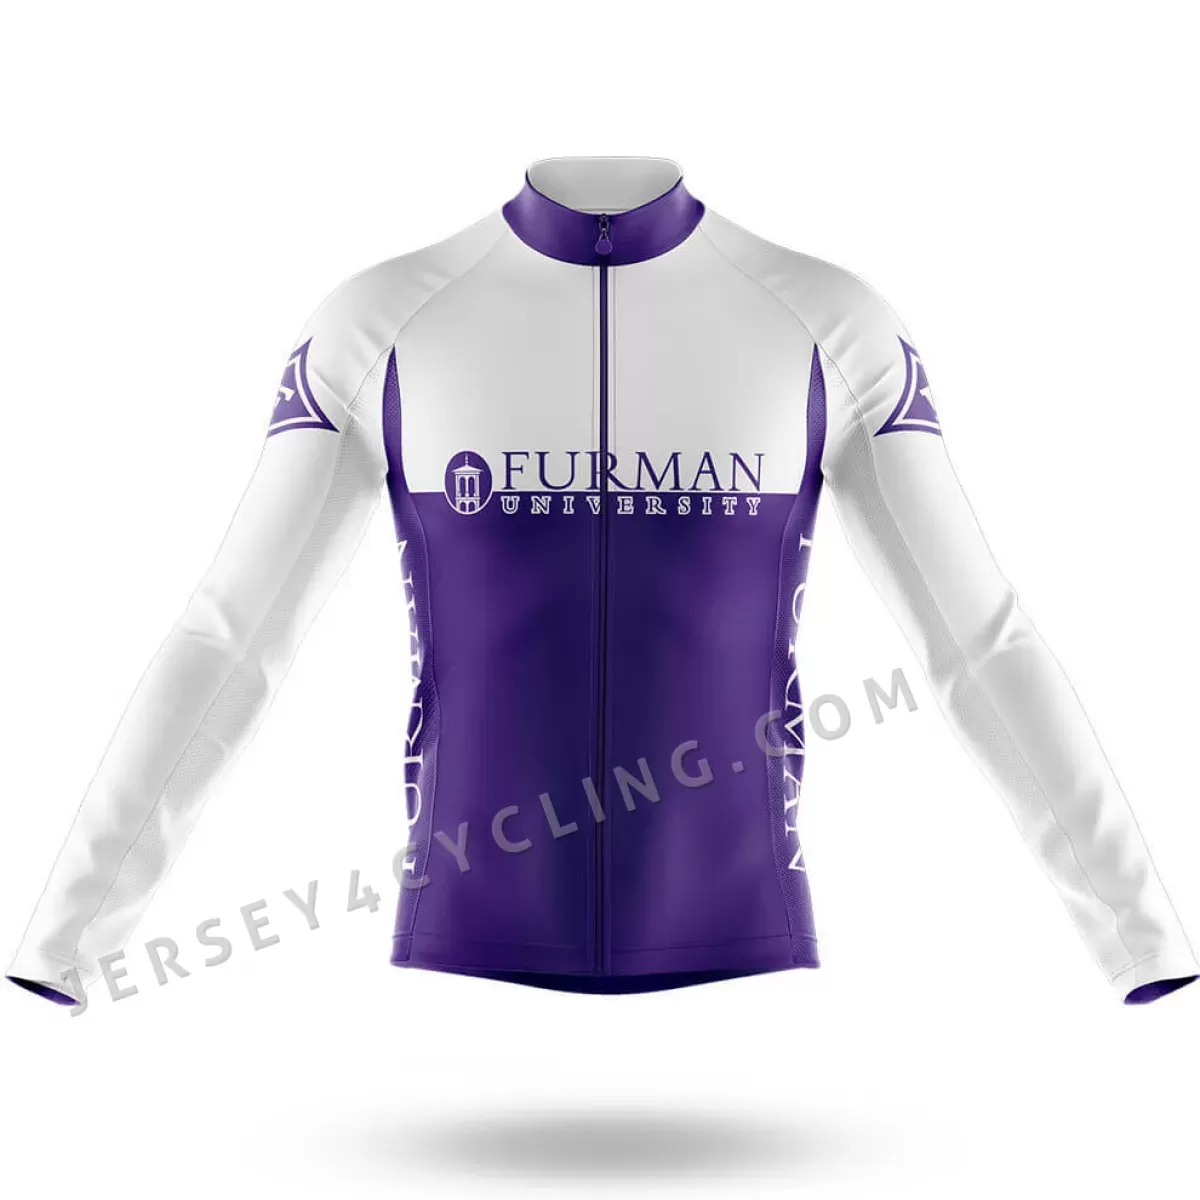 Furman University Long Sleeve Cycling Jersey Ver.2 Restock